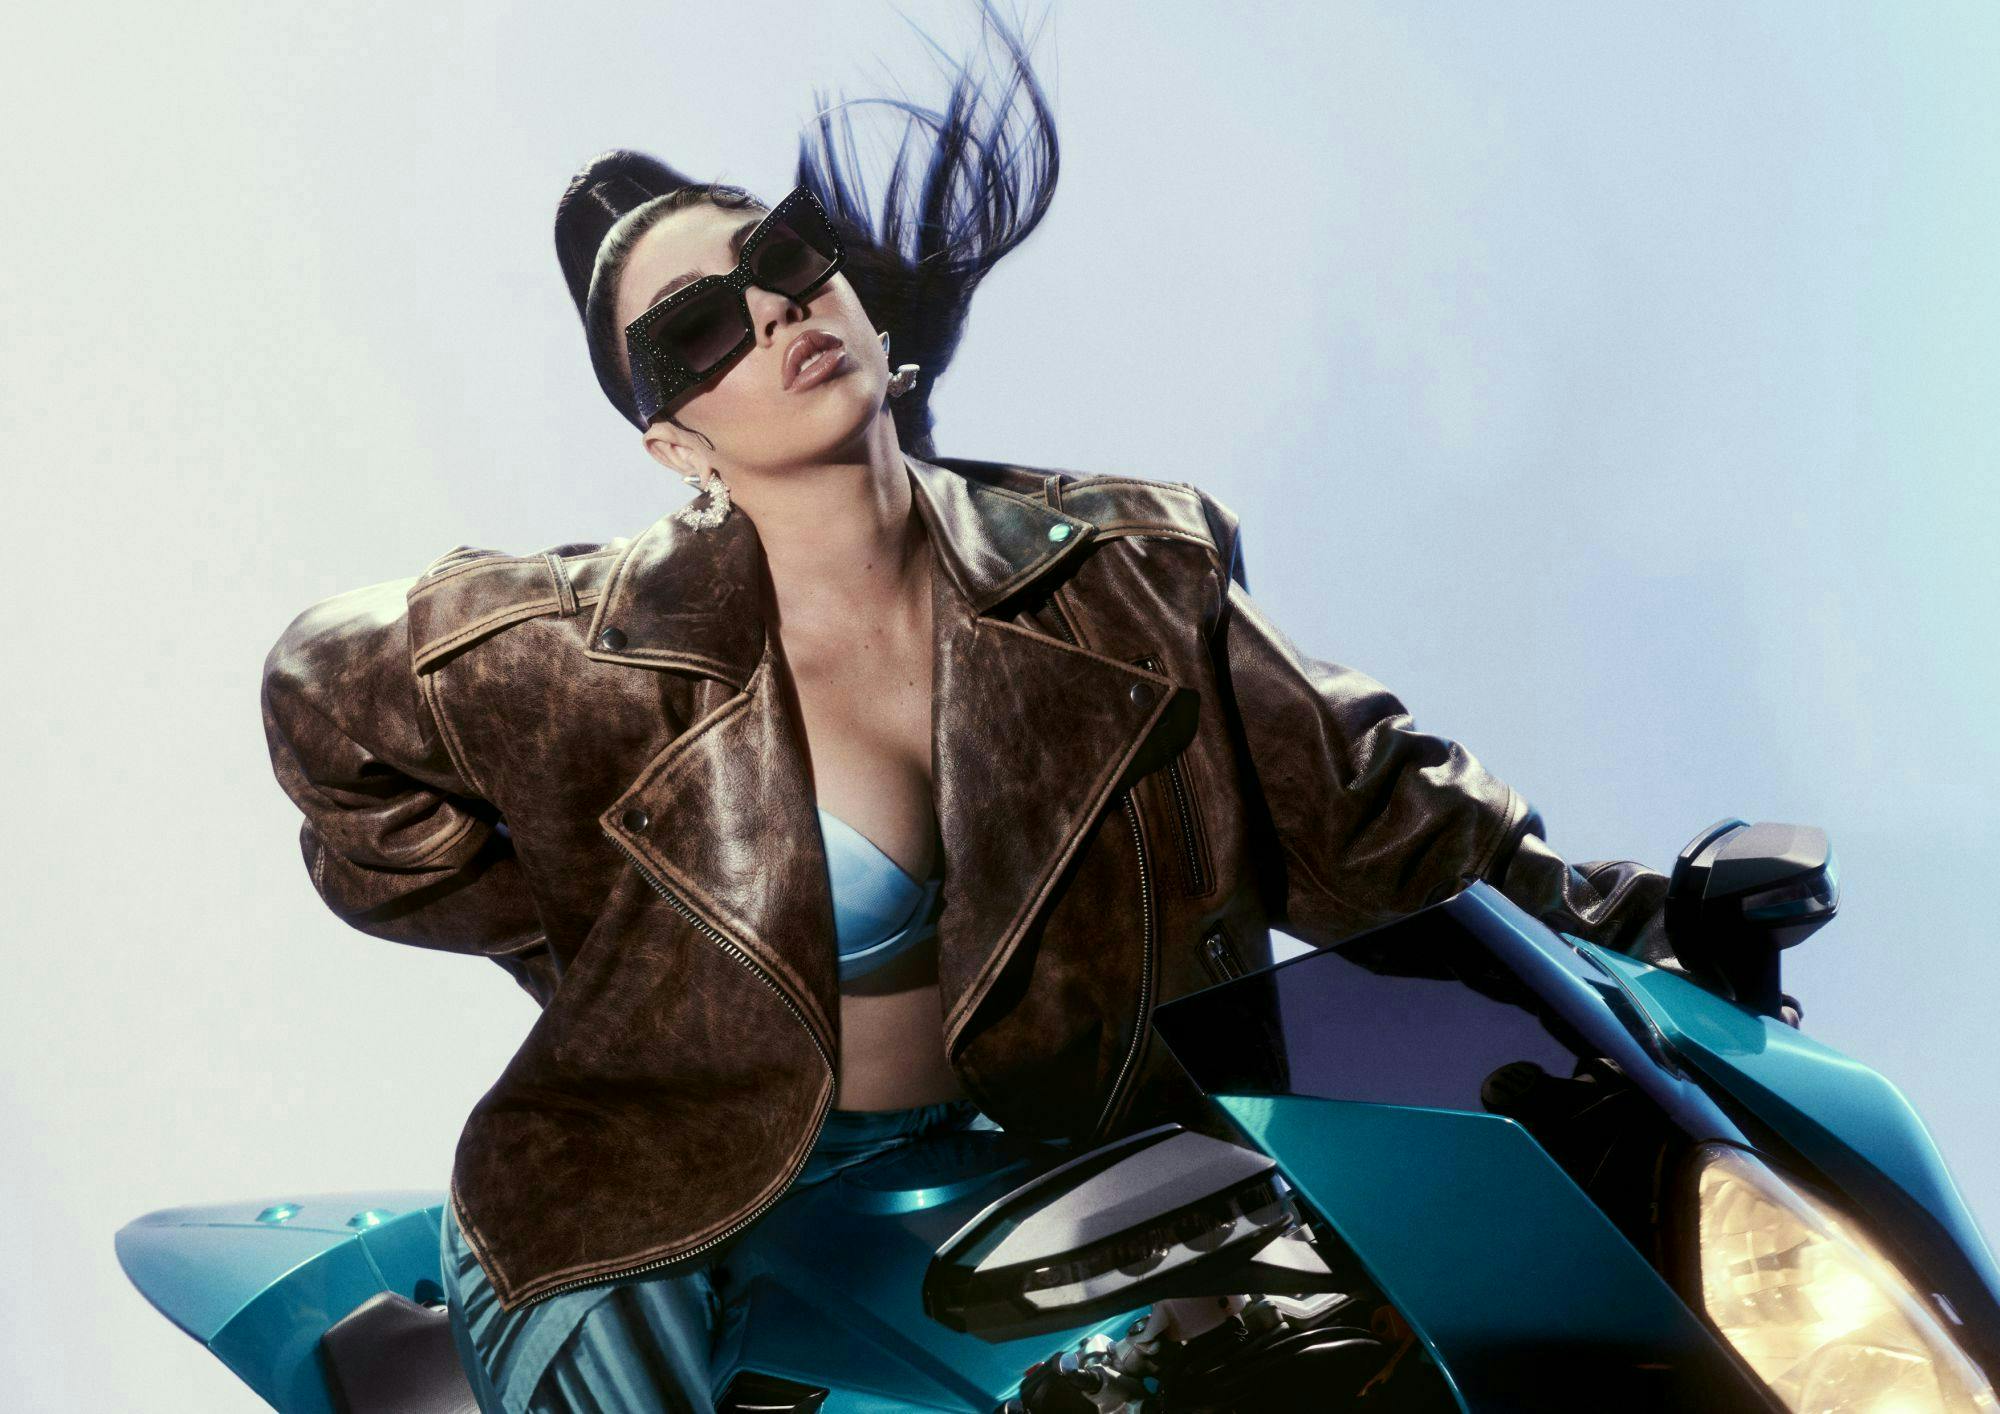 clothing coat jacket adult female person woman accessories sunglasses portrait